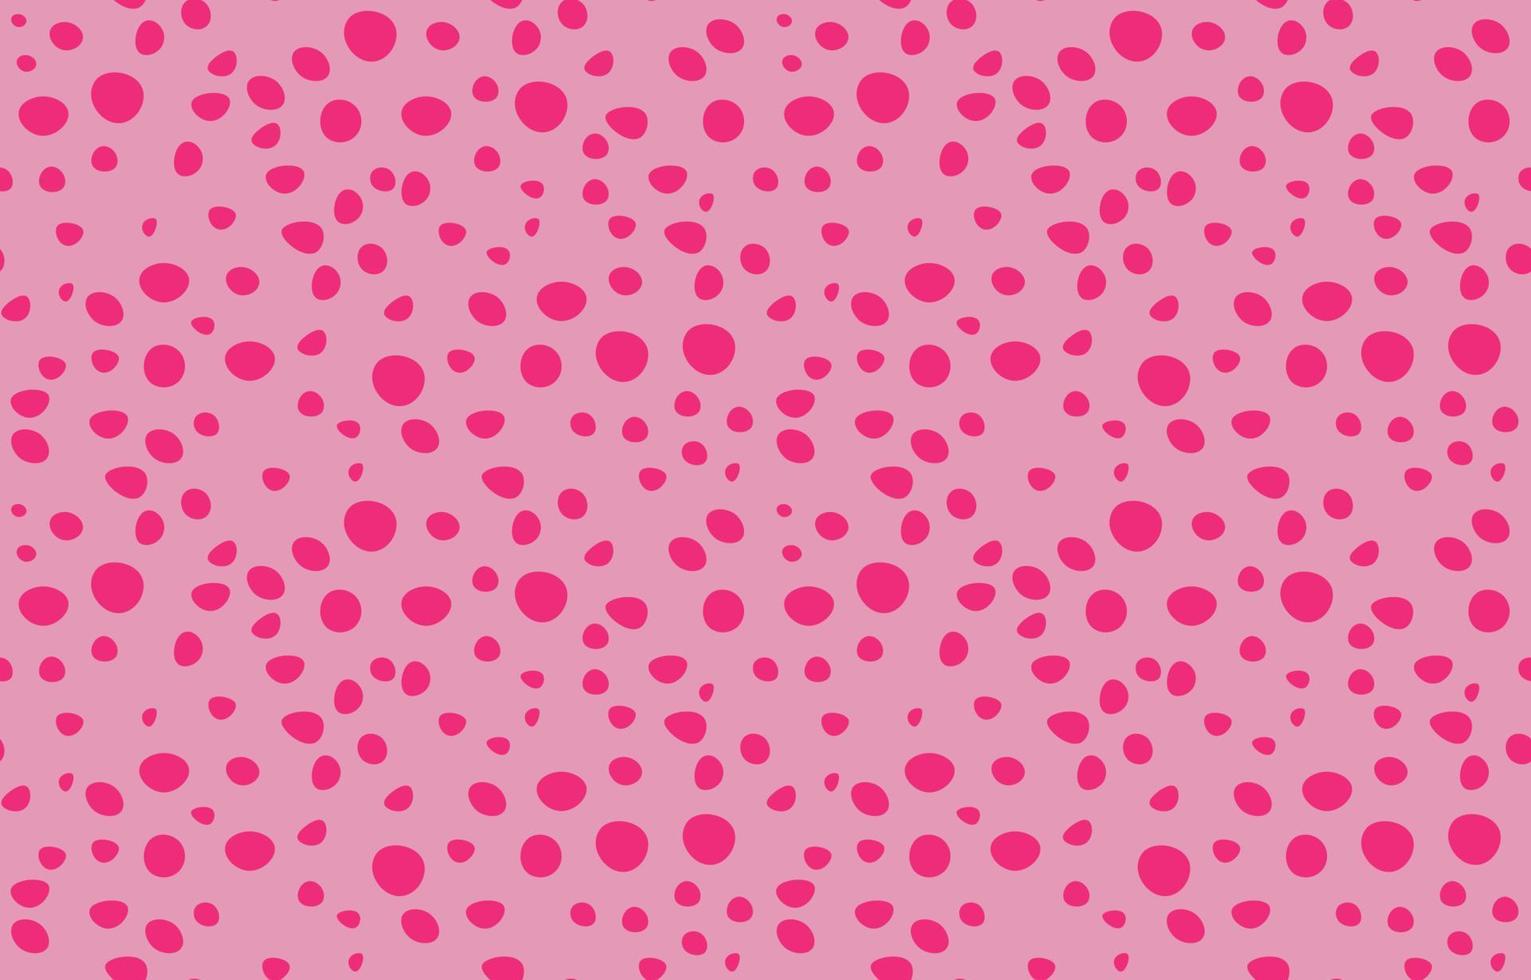 pink dots seamless pattern on pink background,cute wallpaper,bright minimalist style,modern polka dot fabric pattern vector